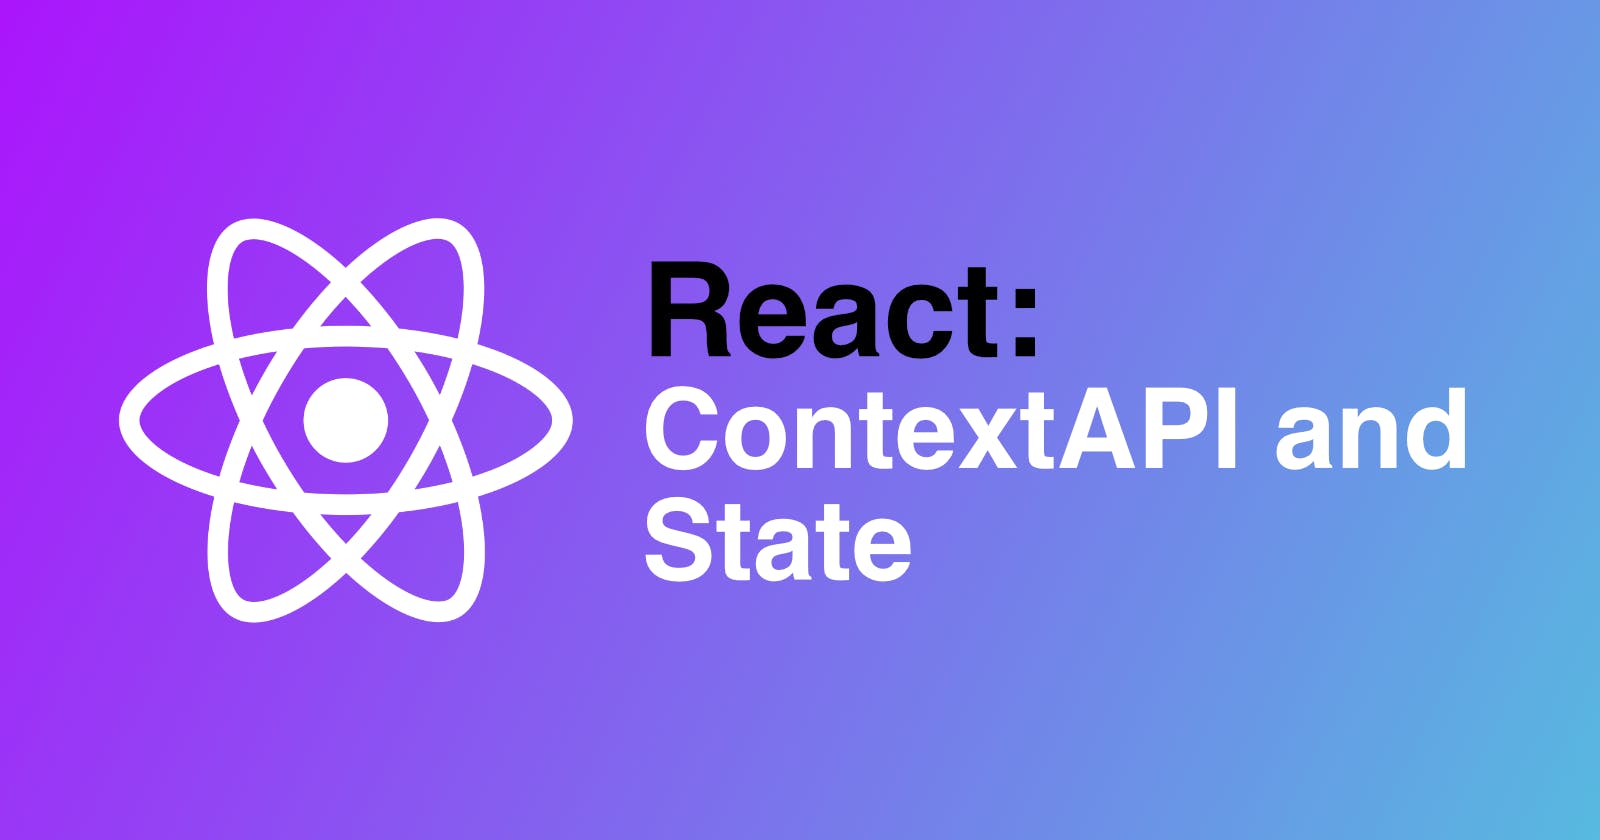 React and the ContextAPI